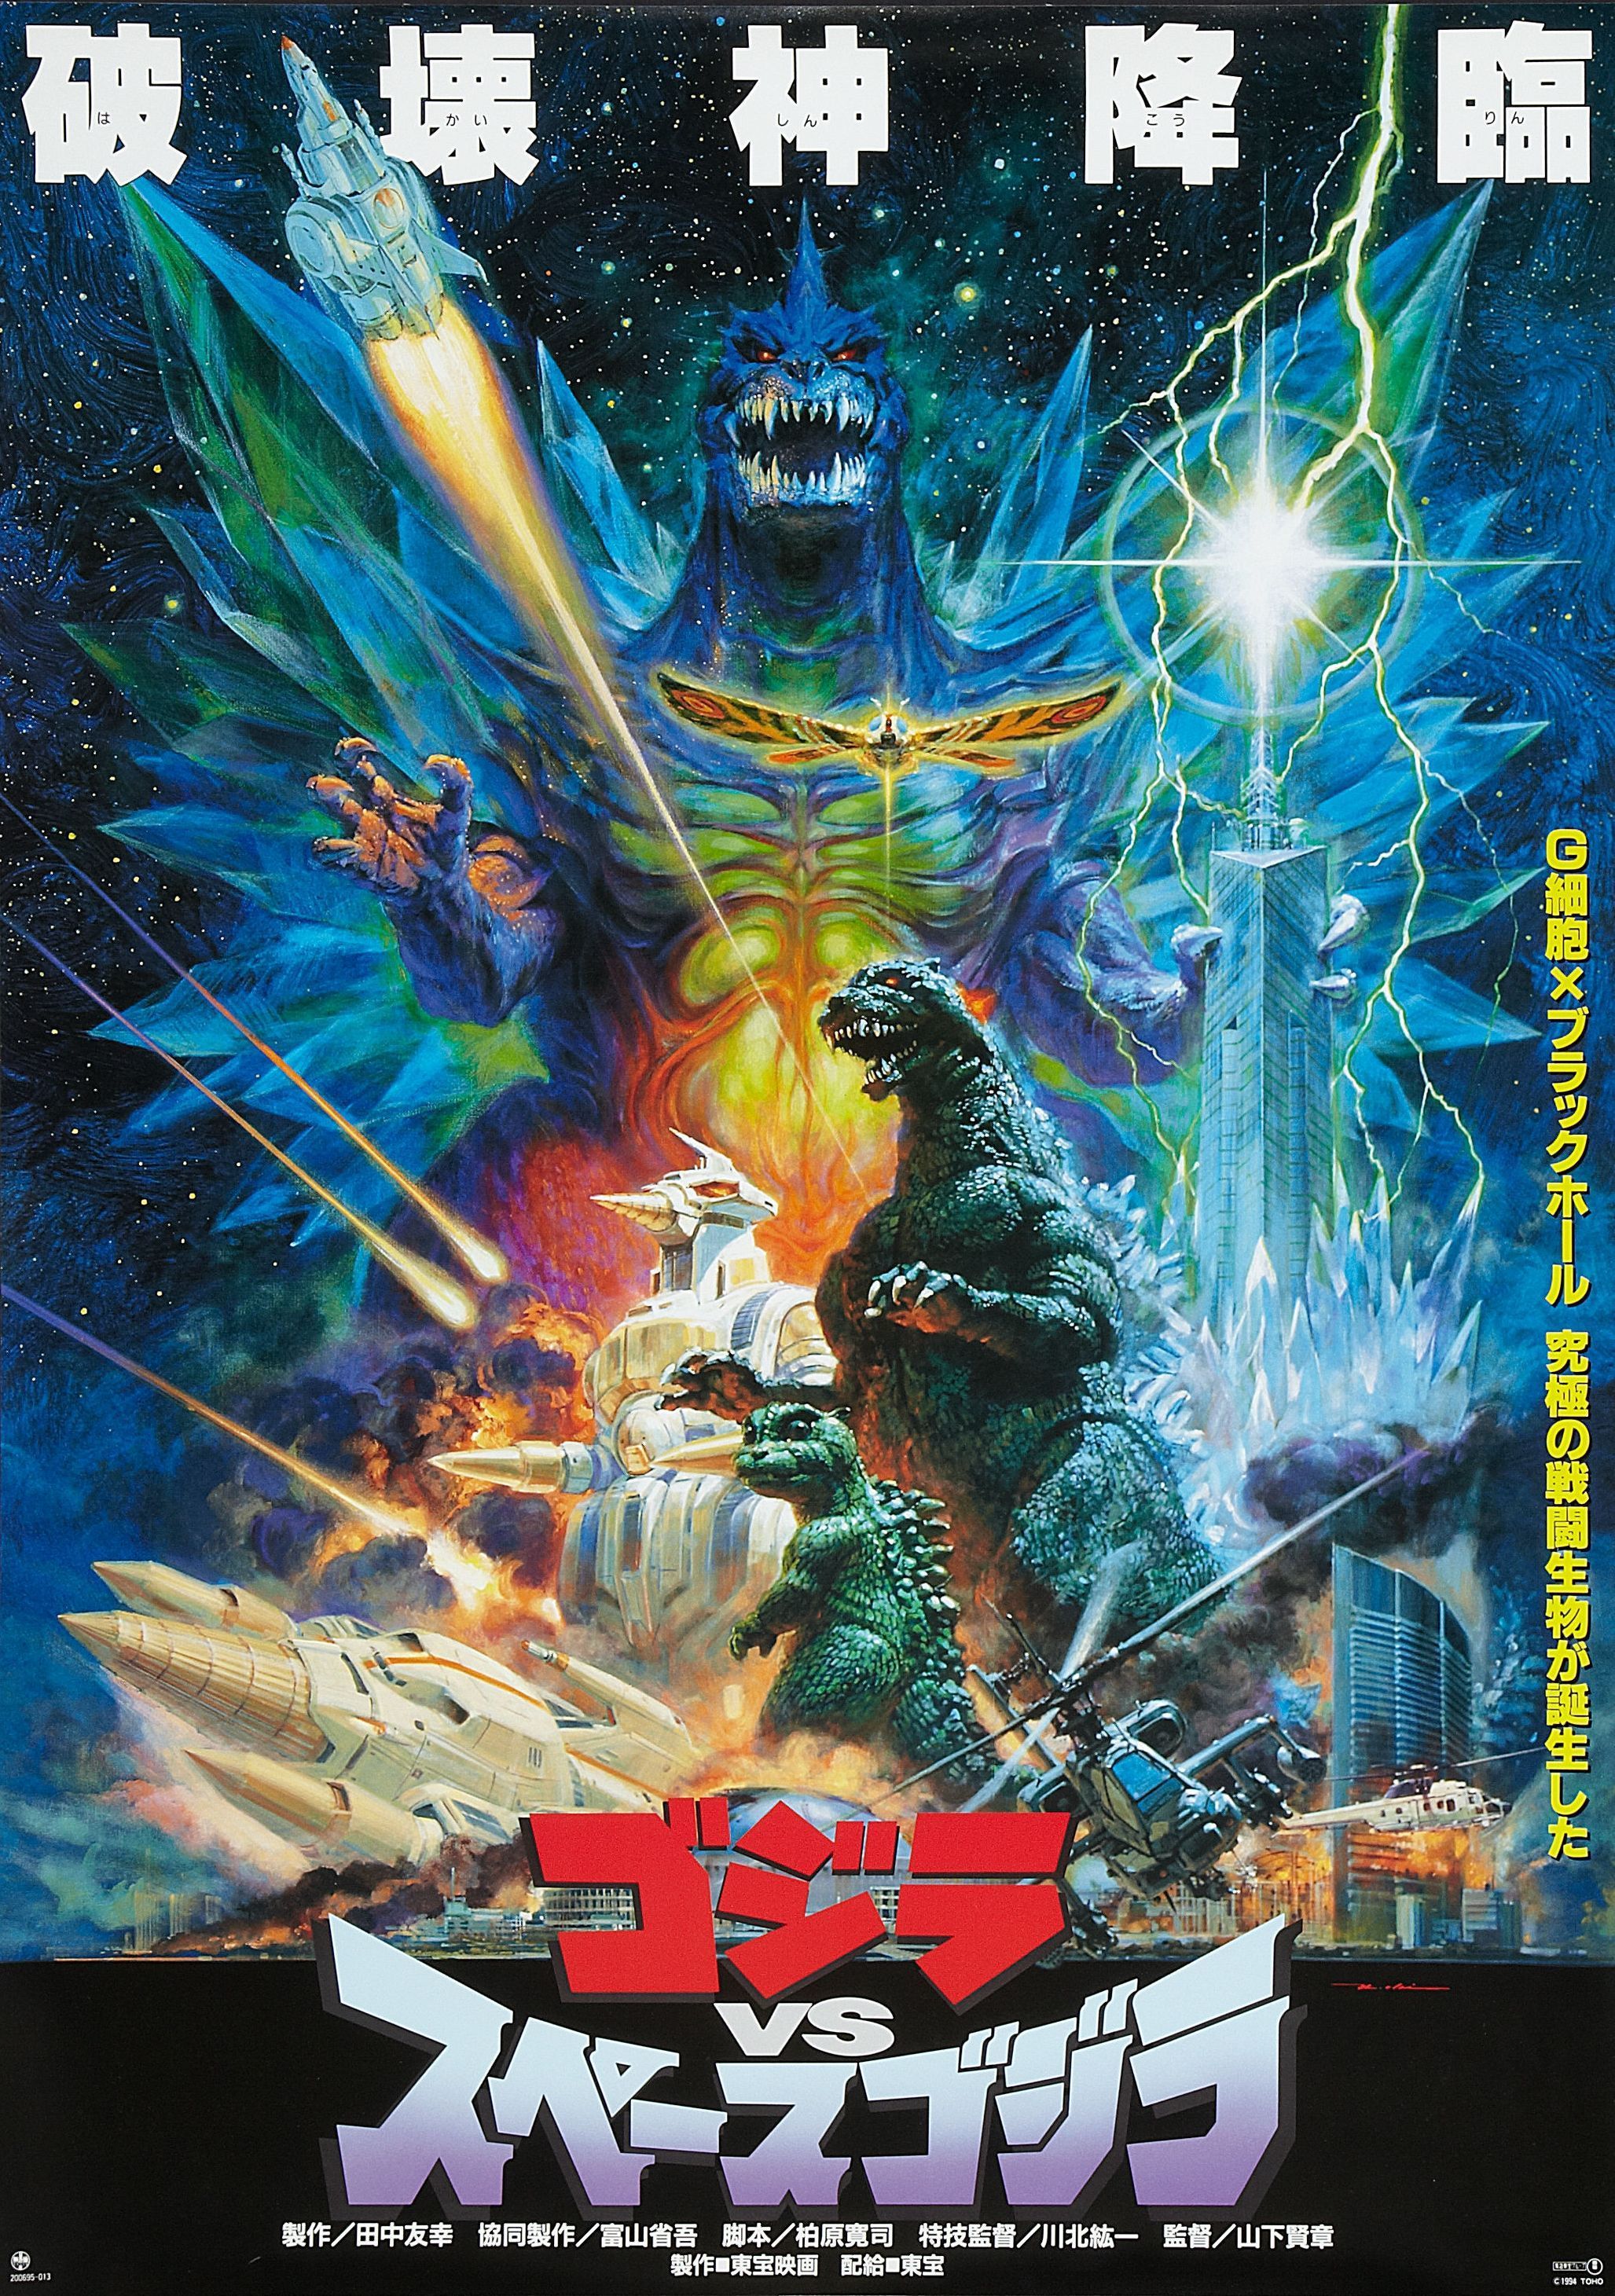 Godzilla vs. SpaceGodzilla poster